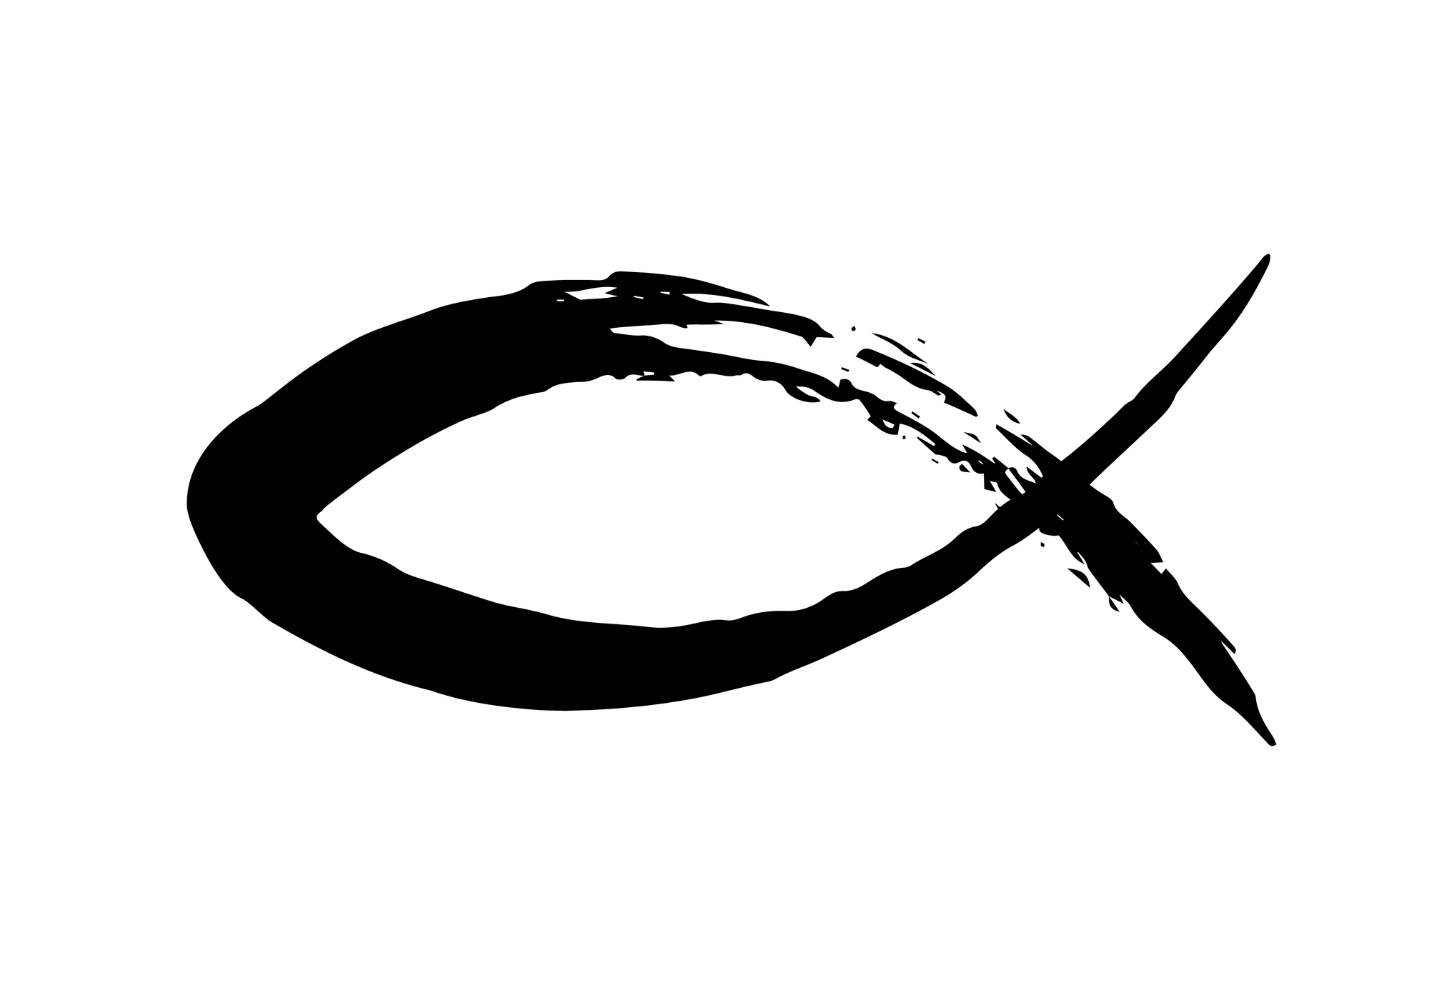 A black symbol of a fish

Description automatically generated